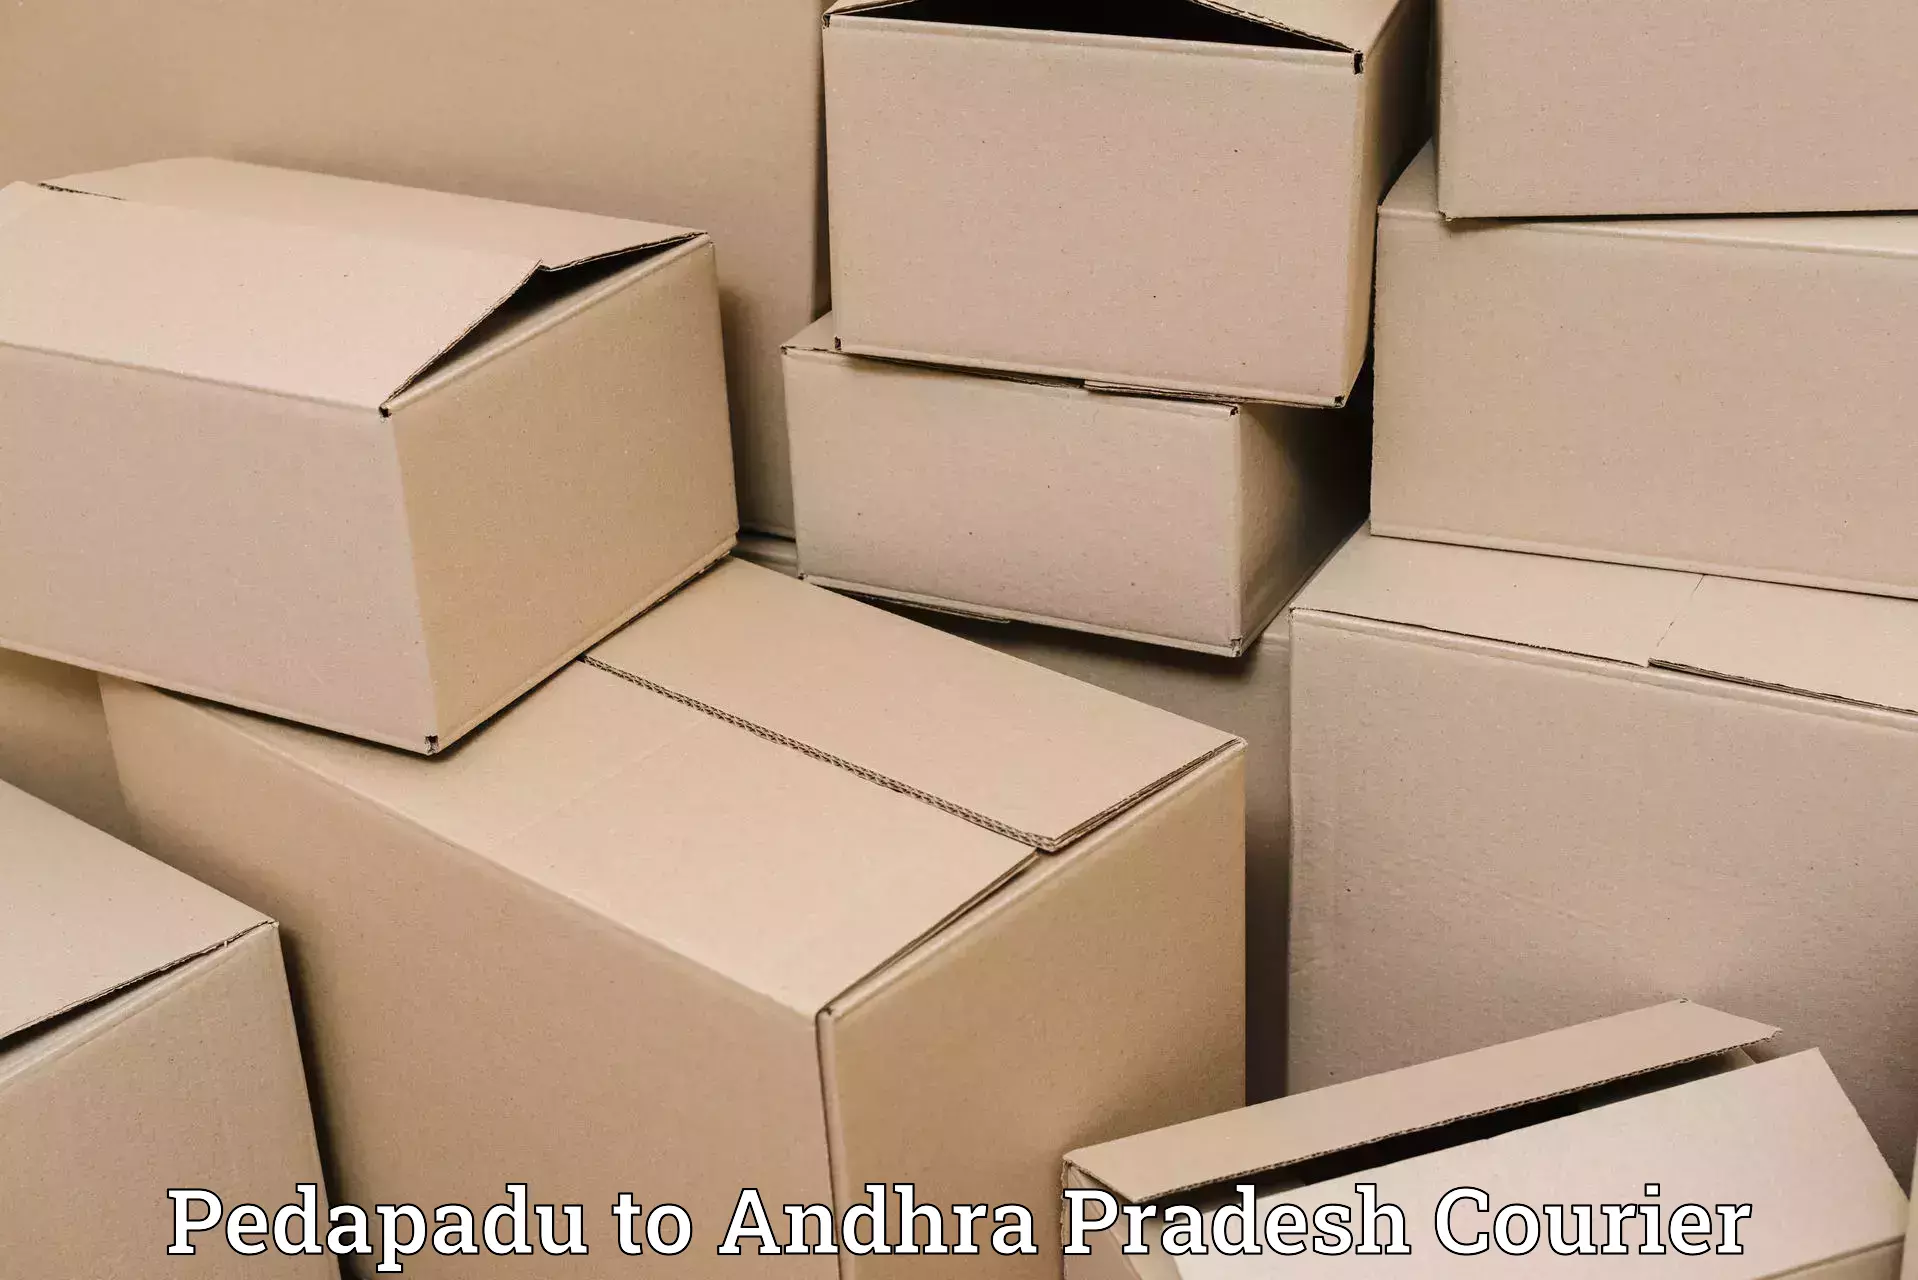 Global logistics network Pedapadu to Chillakallu